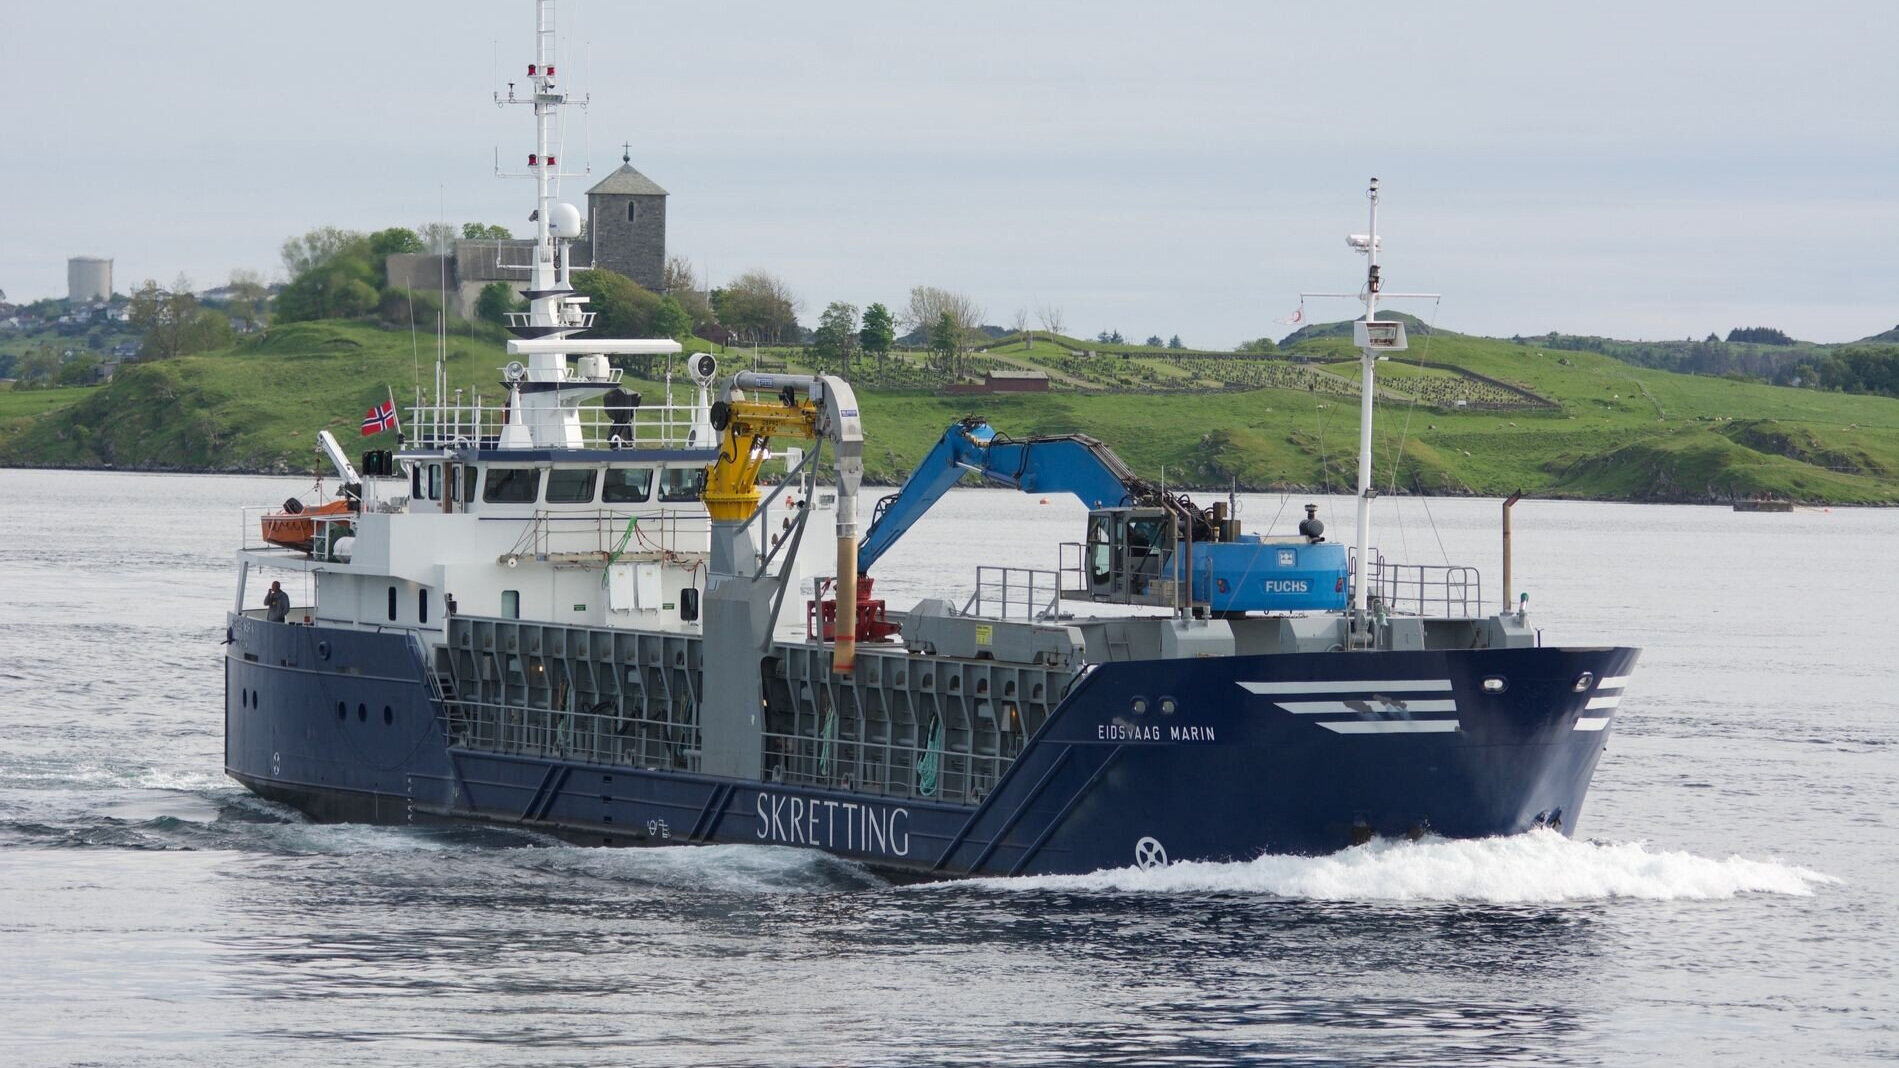 M/S "Eidsvaag Marin" - Bulk/Self-unloading vessel